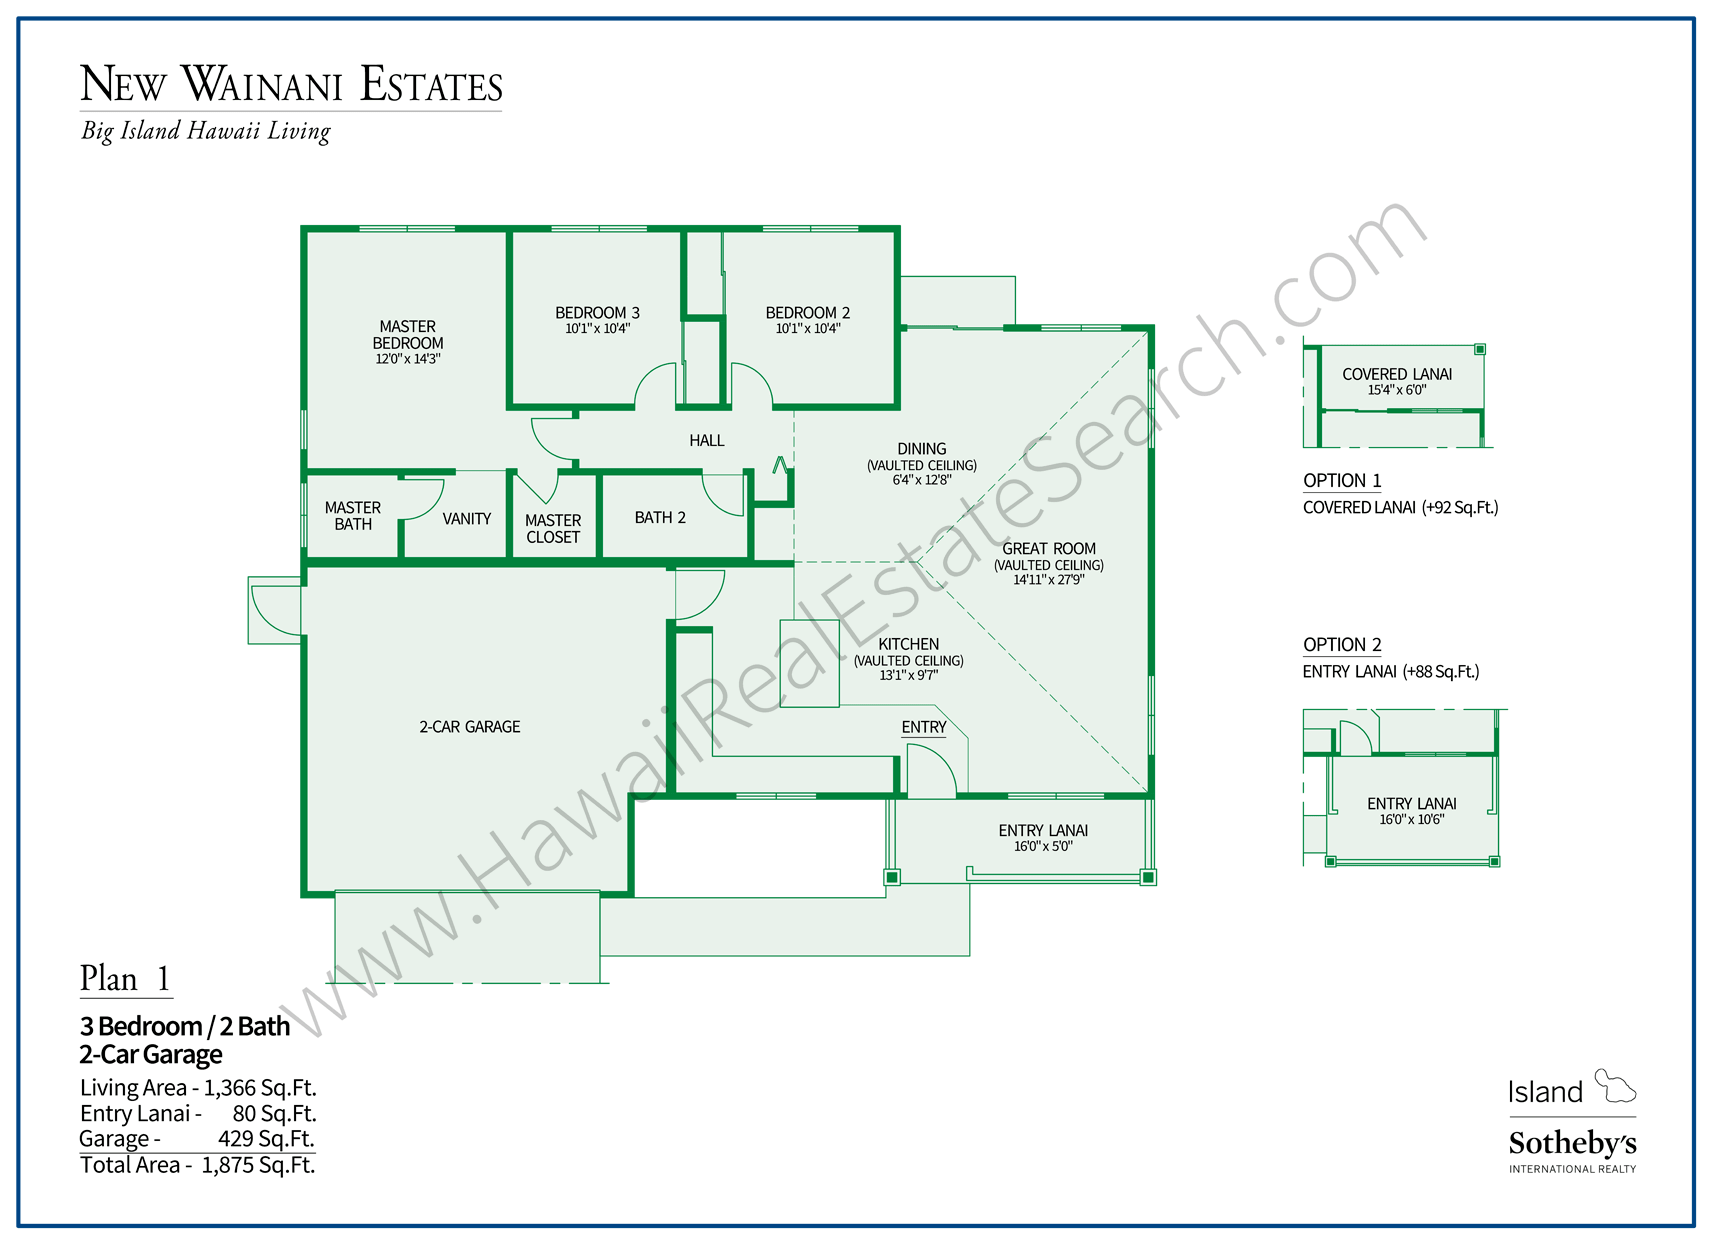 New Waianani Estates Floor Plan 1